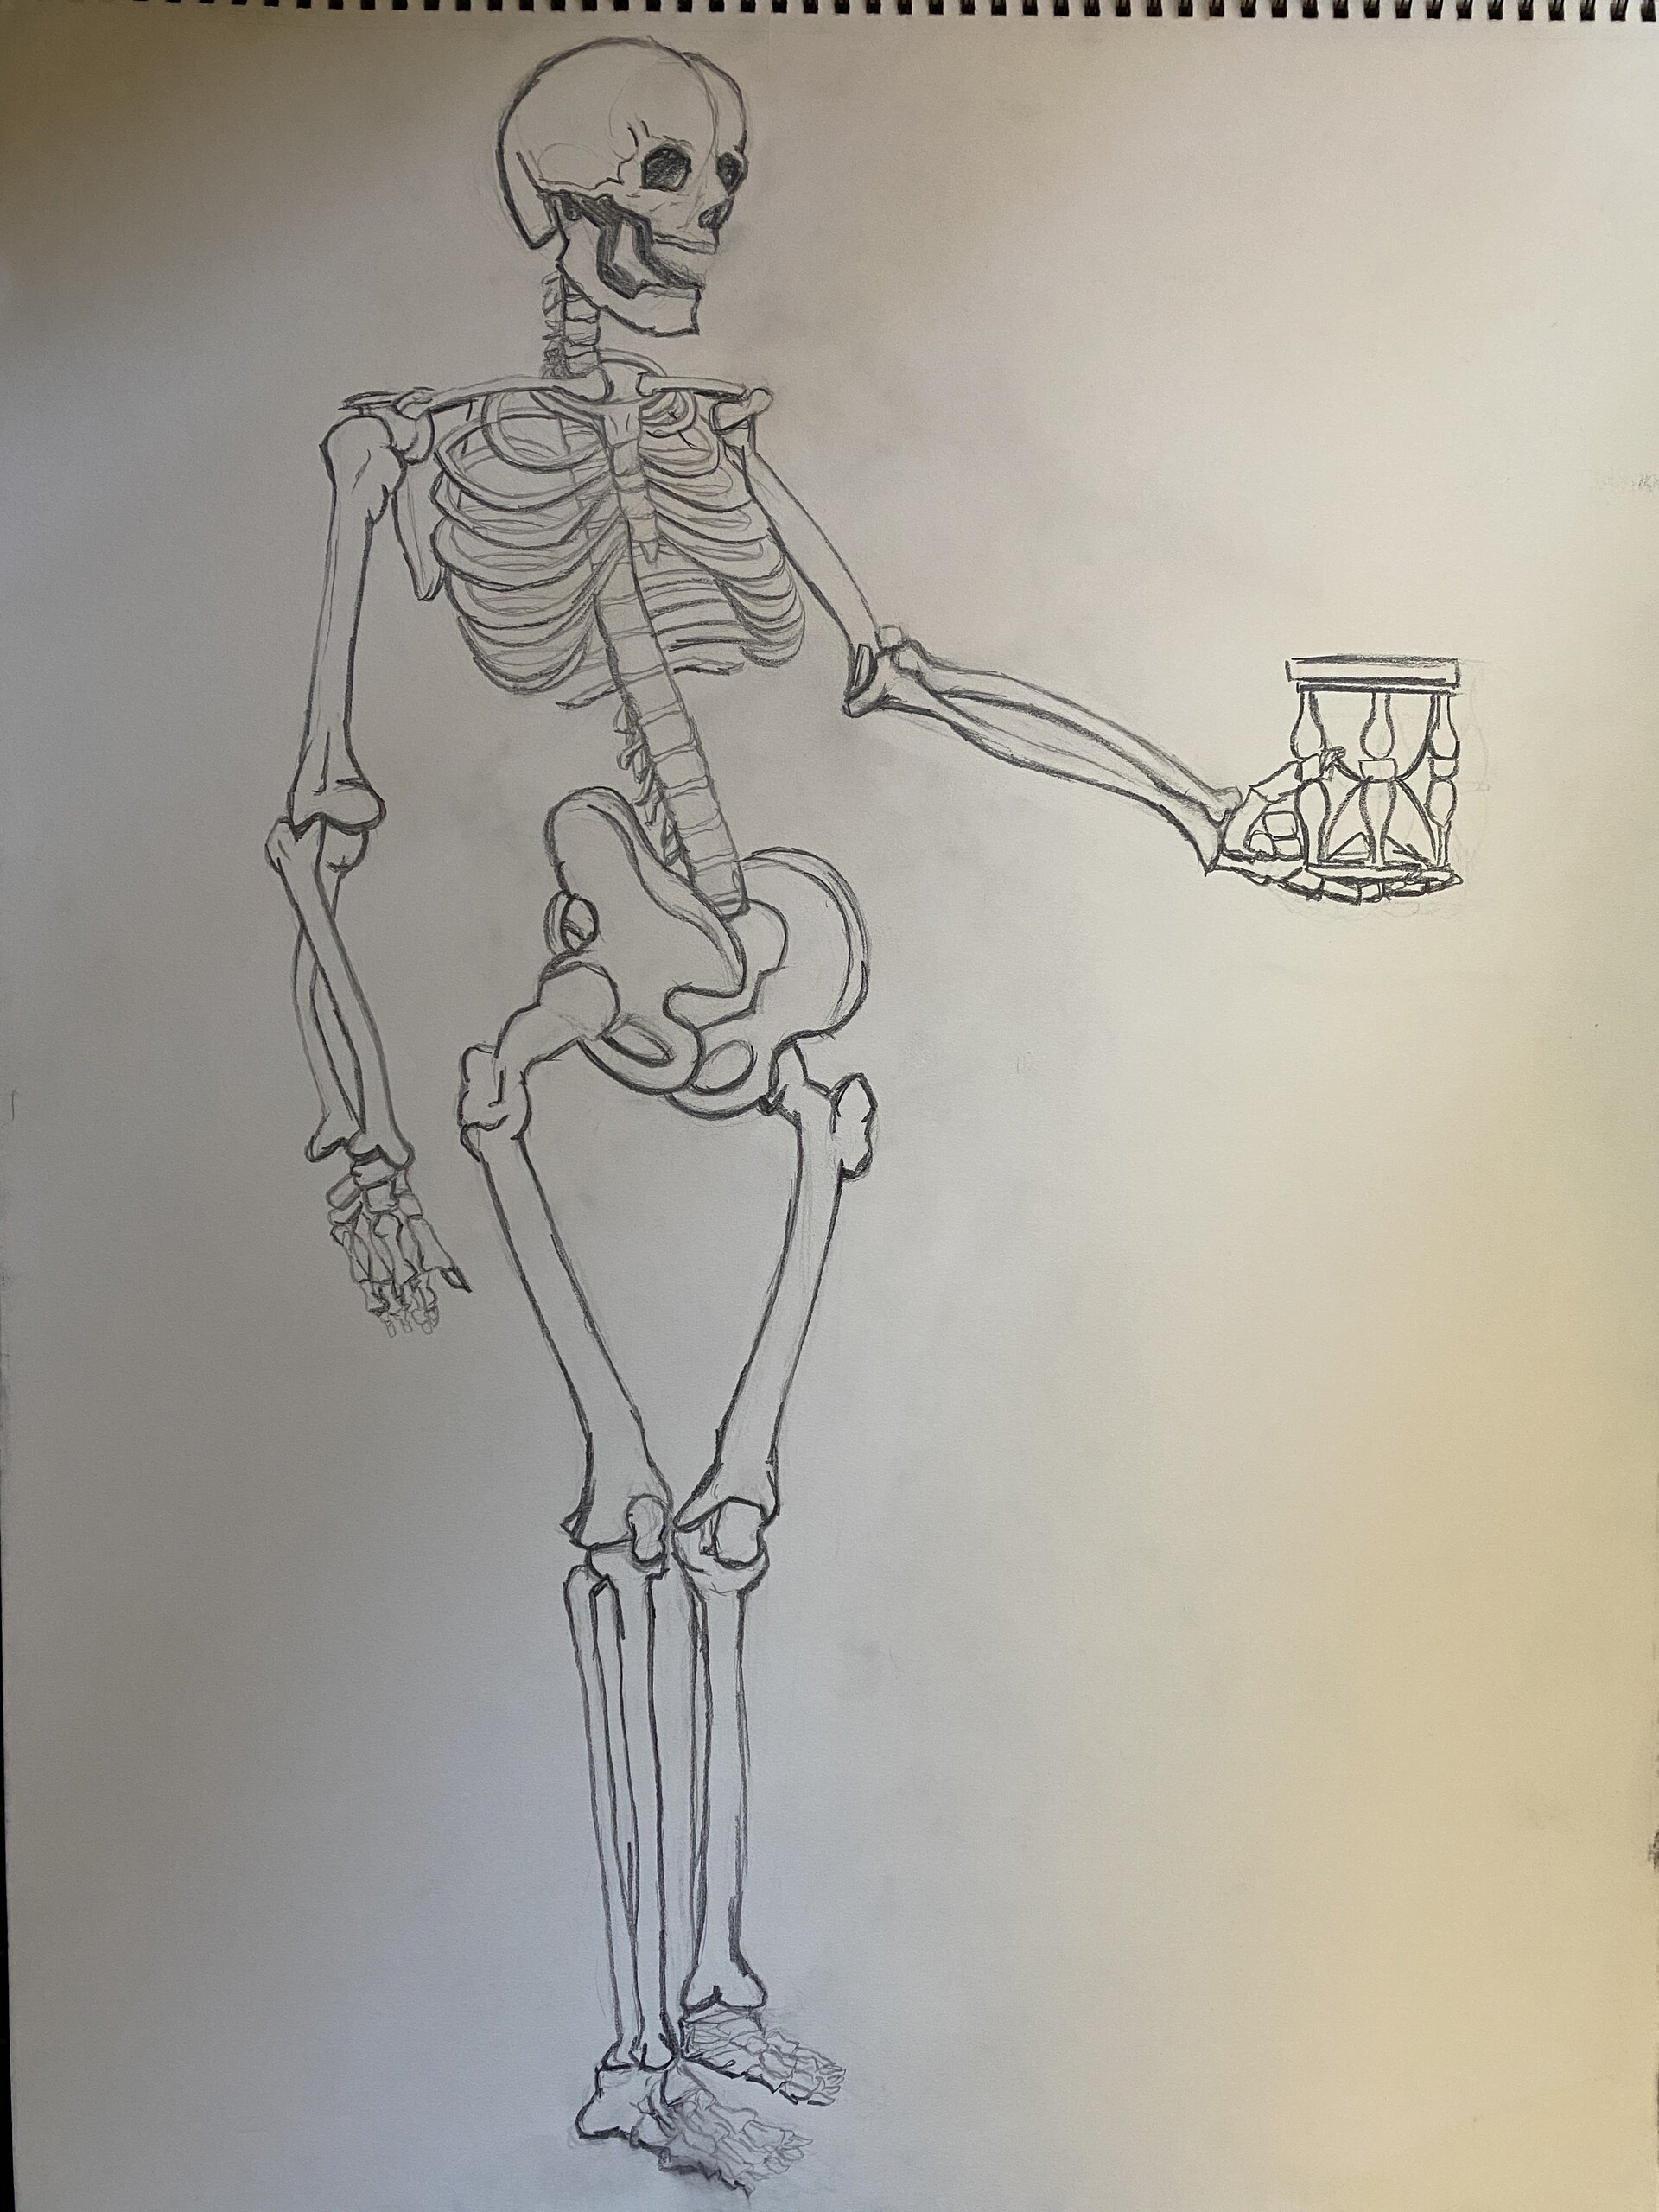 bsiuba on Twitter A skeleton drawing Pencil and fineliner skeleton  skeletondrawing artwork rysunek darkfantasy illustration  httpstcoVU45WjnGmU  Twitter